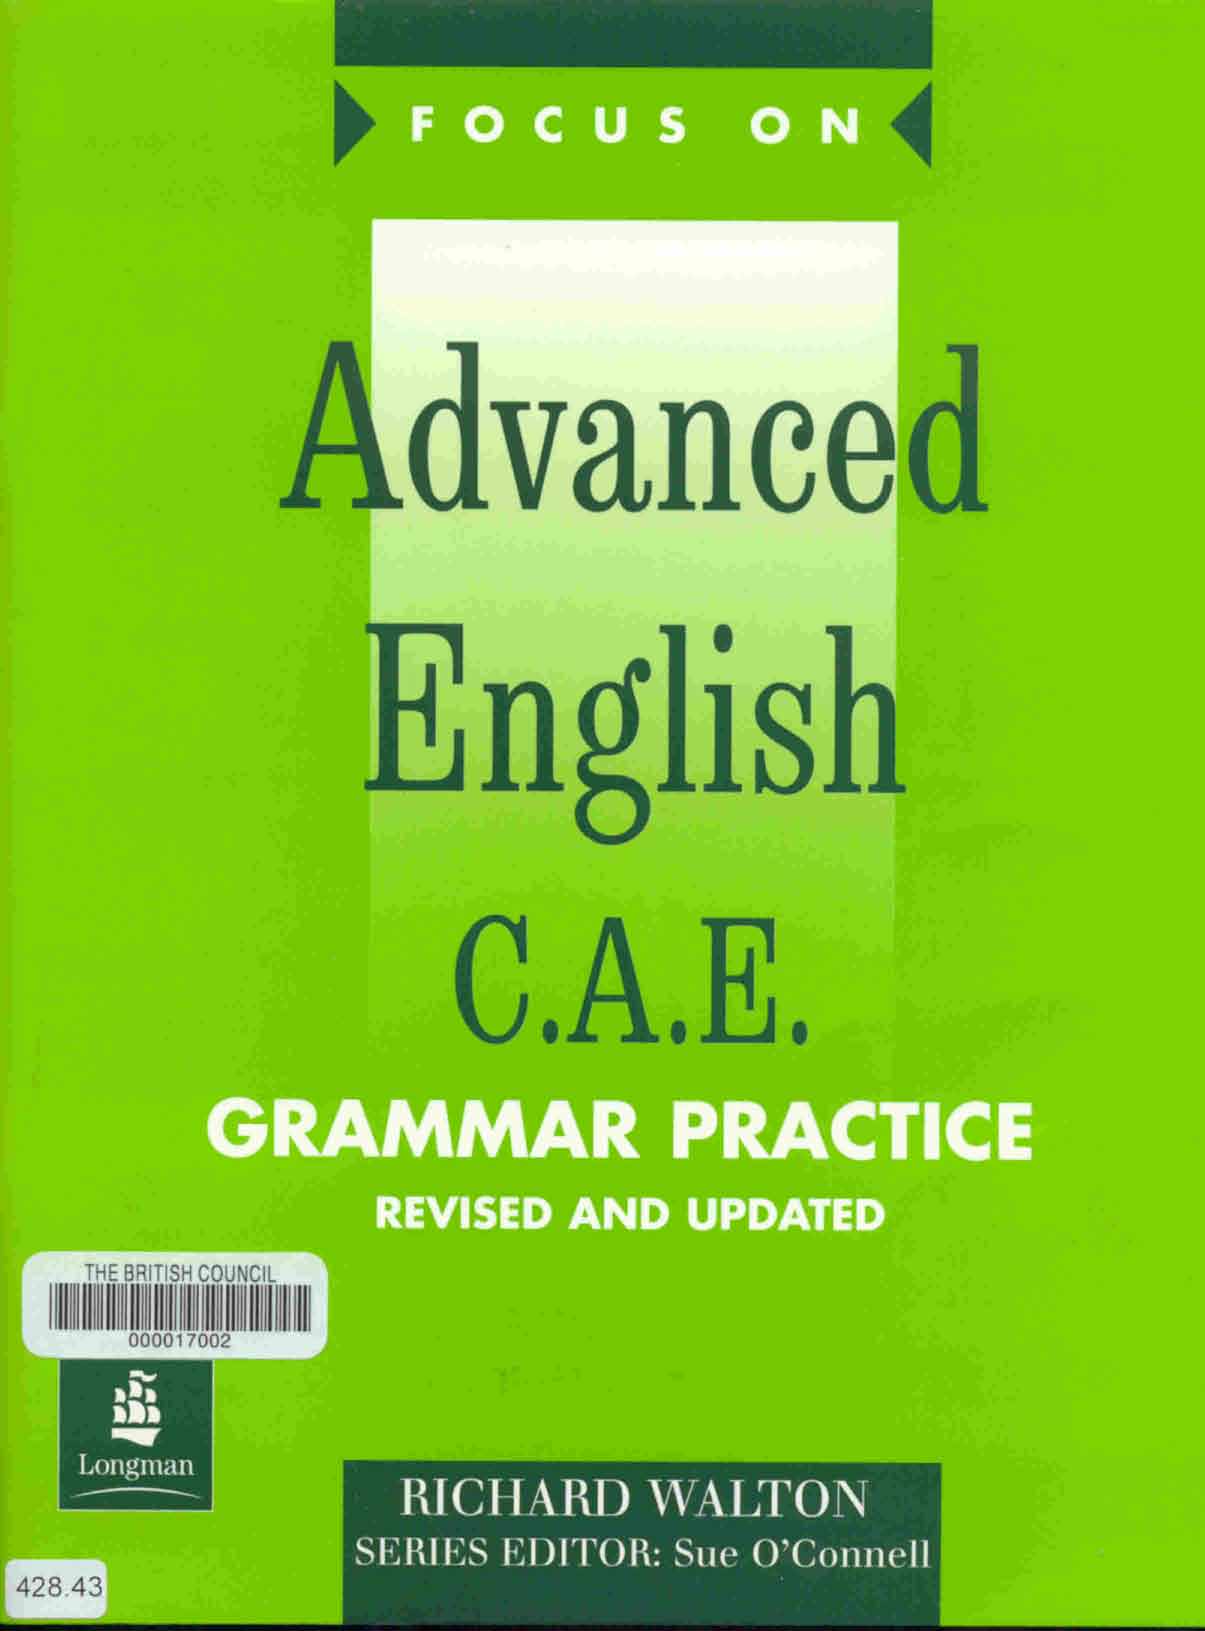 Advanced English Grammar Practice (Longman) 4 Edición Richard Walton PDF